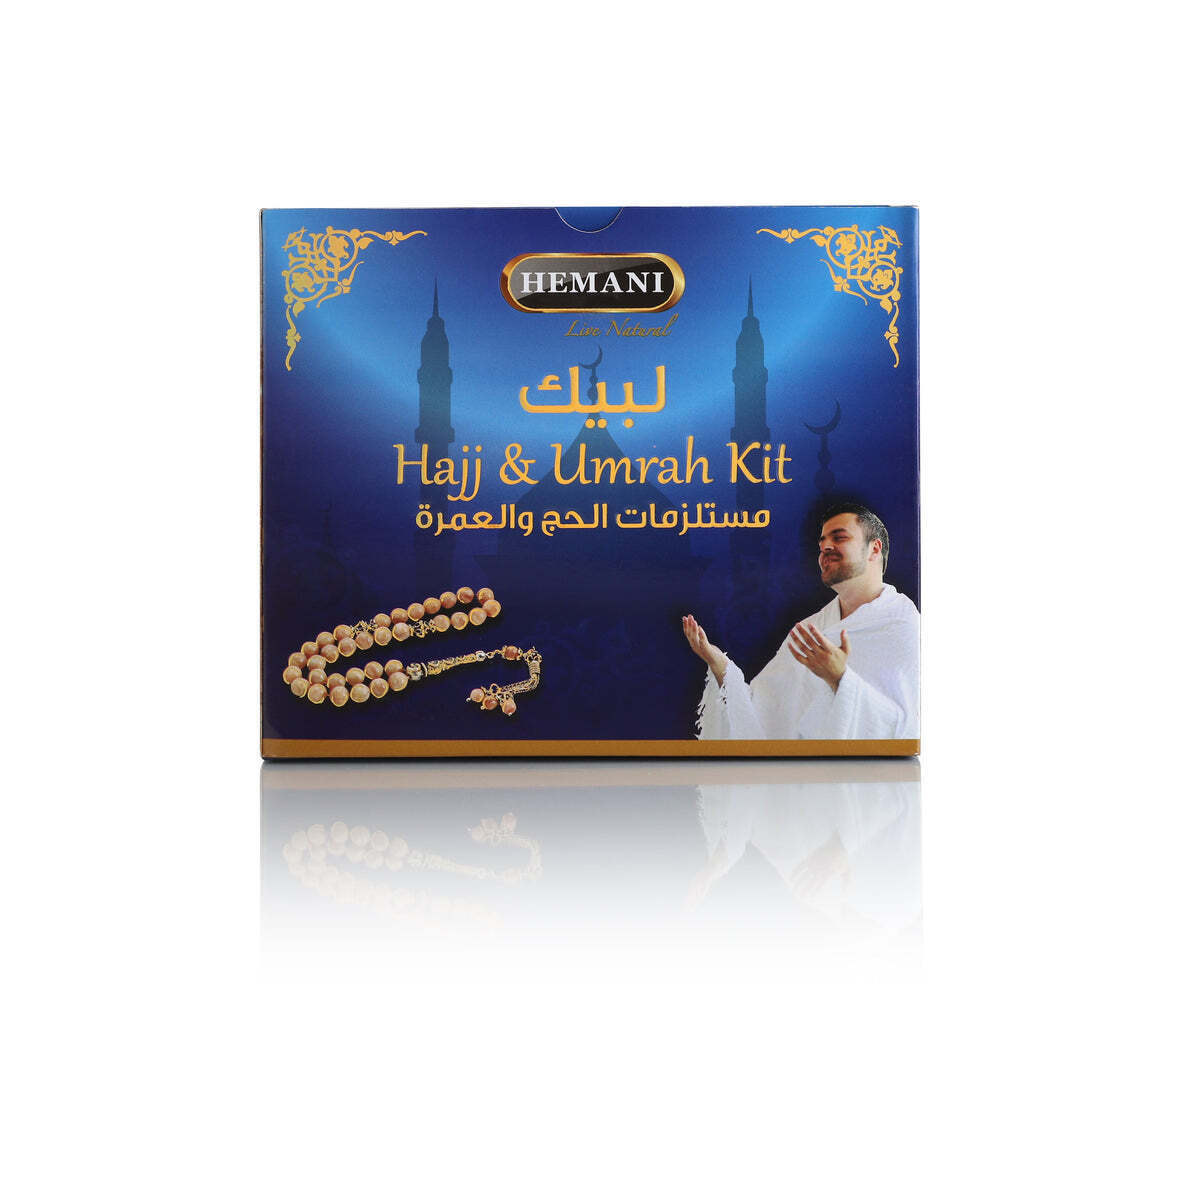 HEMANI Hajj & Umrah Kit 5in1 - Fragrance Free Soap, Gel, Shampoo, Lotion, Miswak